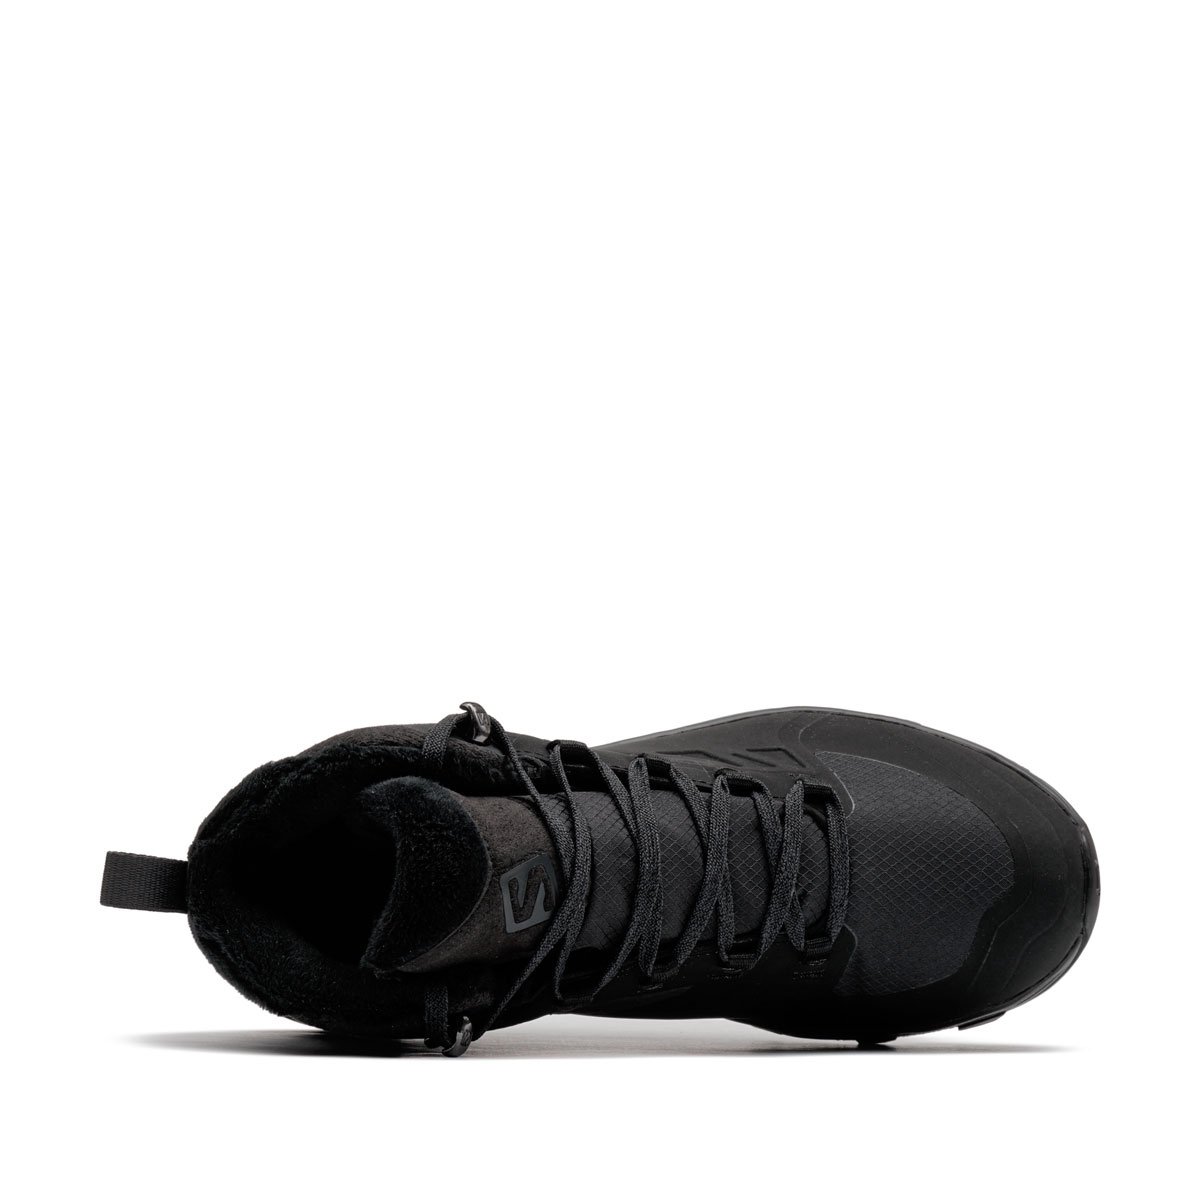 Salomon OutSnap CS WaterProof Дамски спортни обувки 411101